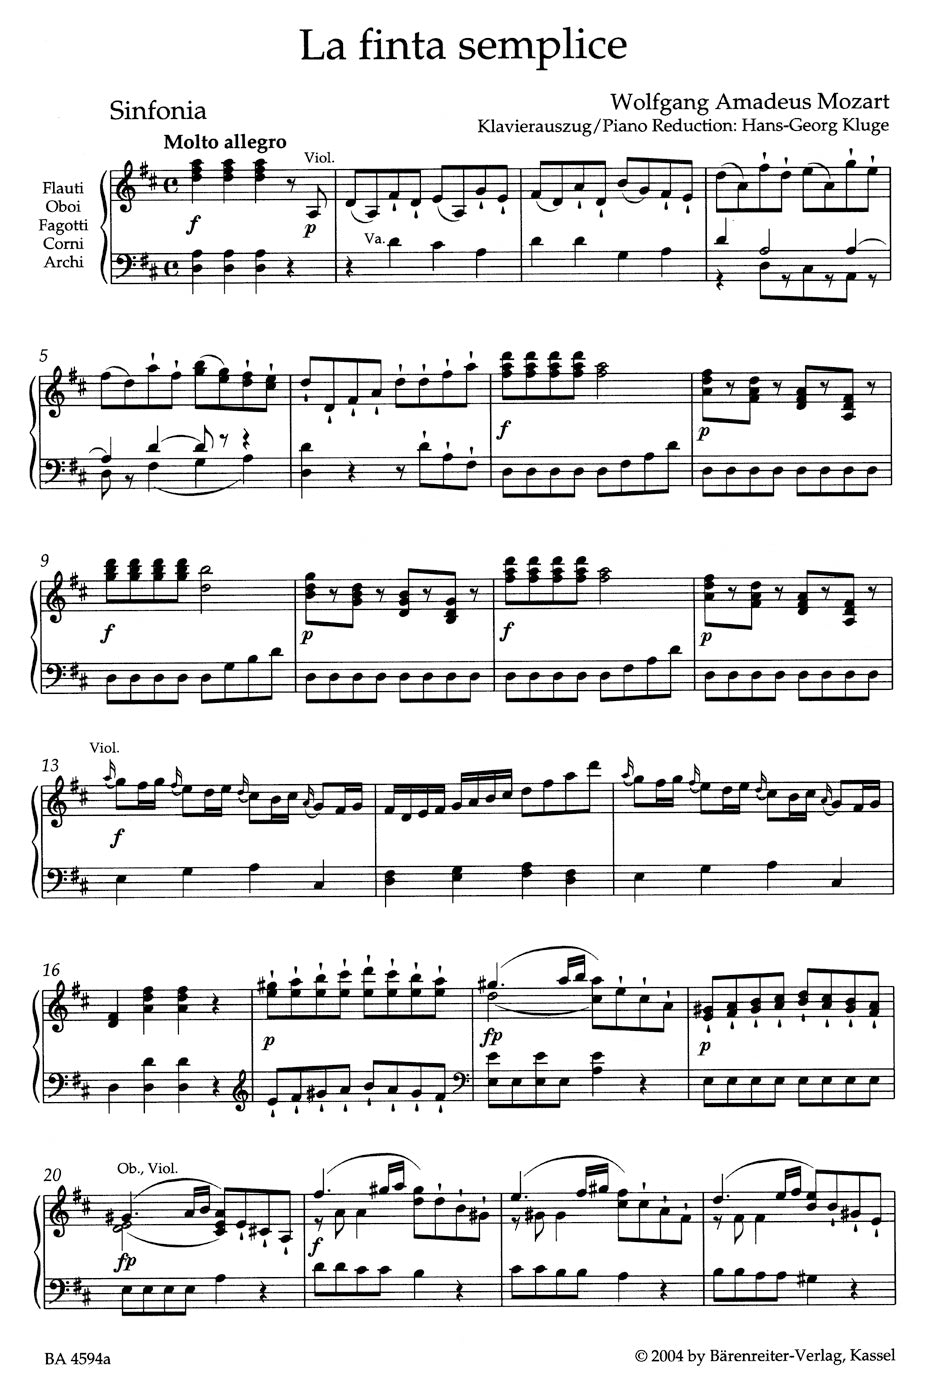 Mozart: La finta semplice, K. 51 (46a)